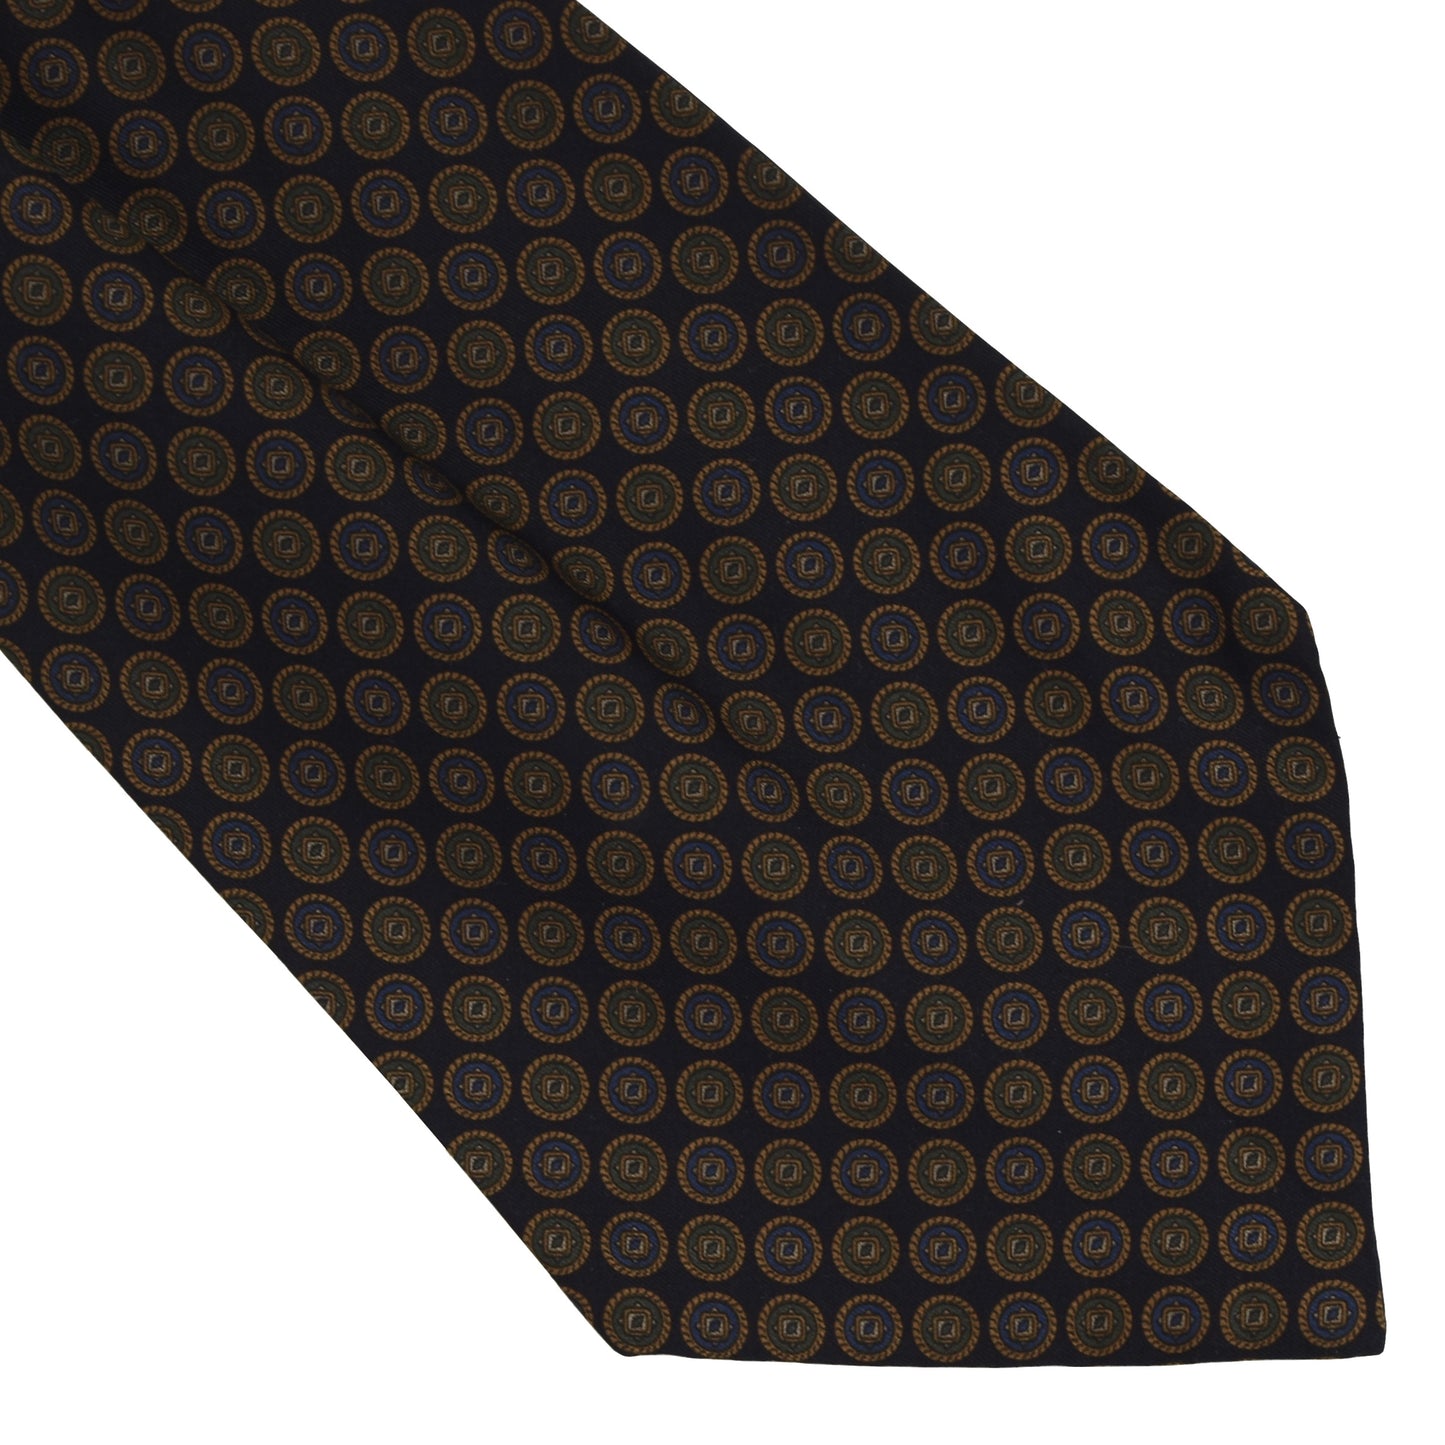 Ascot/Cravatte-Krawatte aus Seide – Marineblaue Medaillons